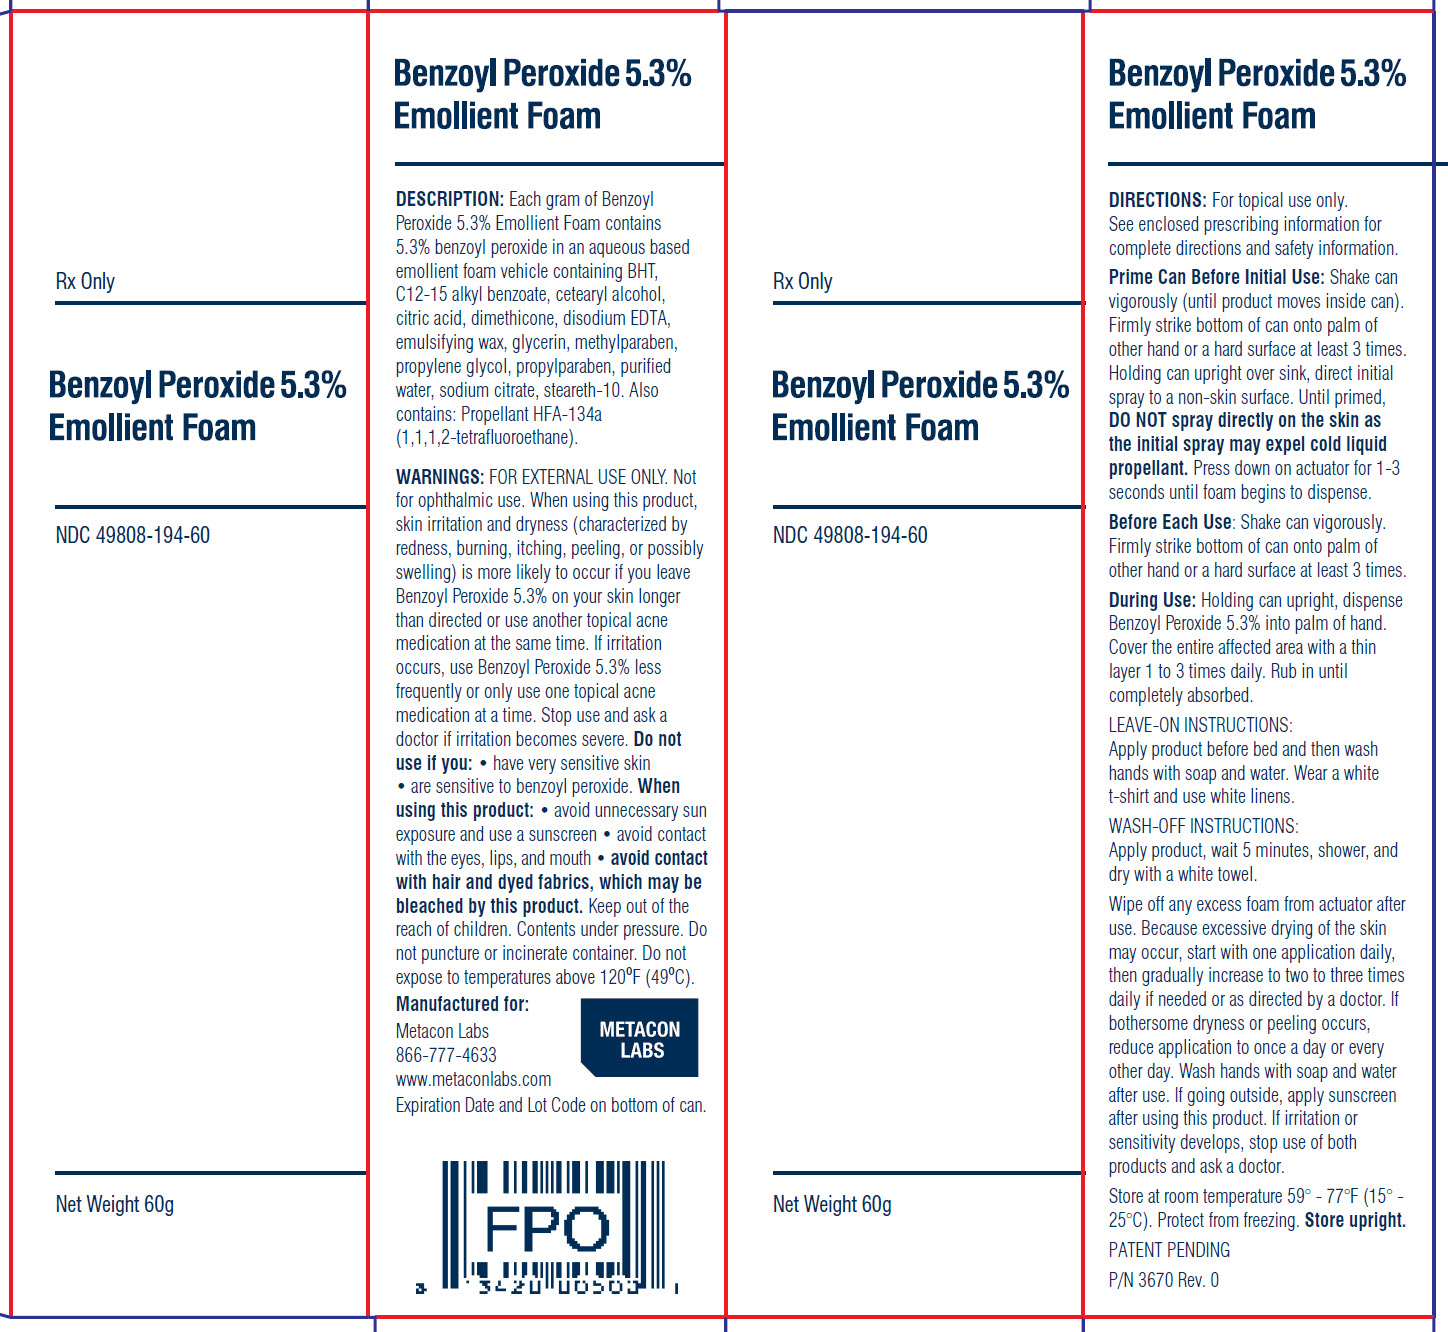 Benzoyl Peroxide Emollient Foam 60g Carton Label